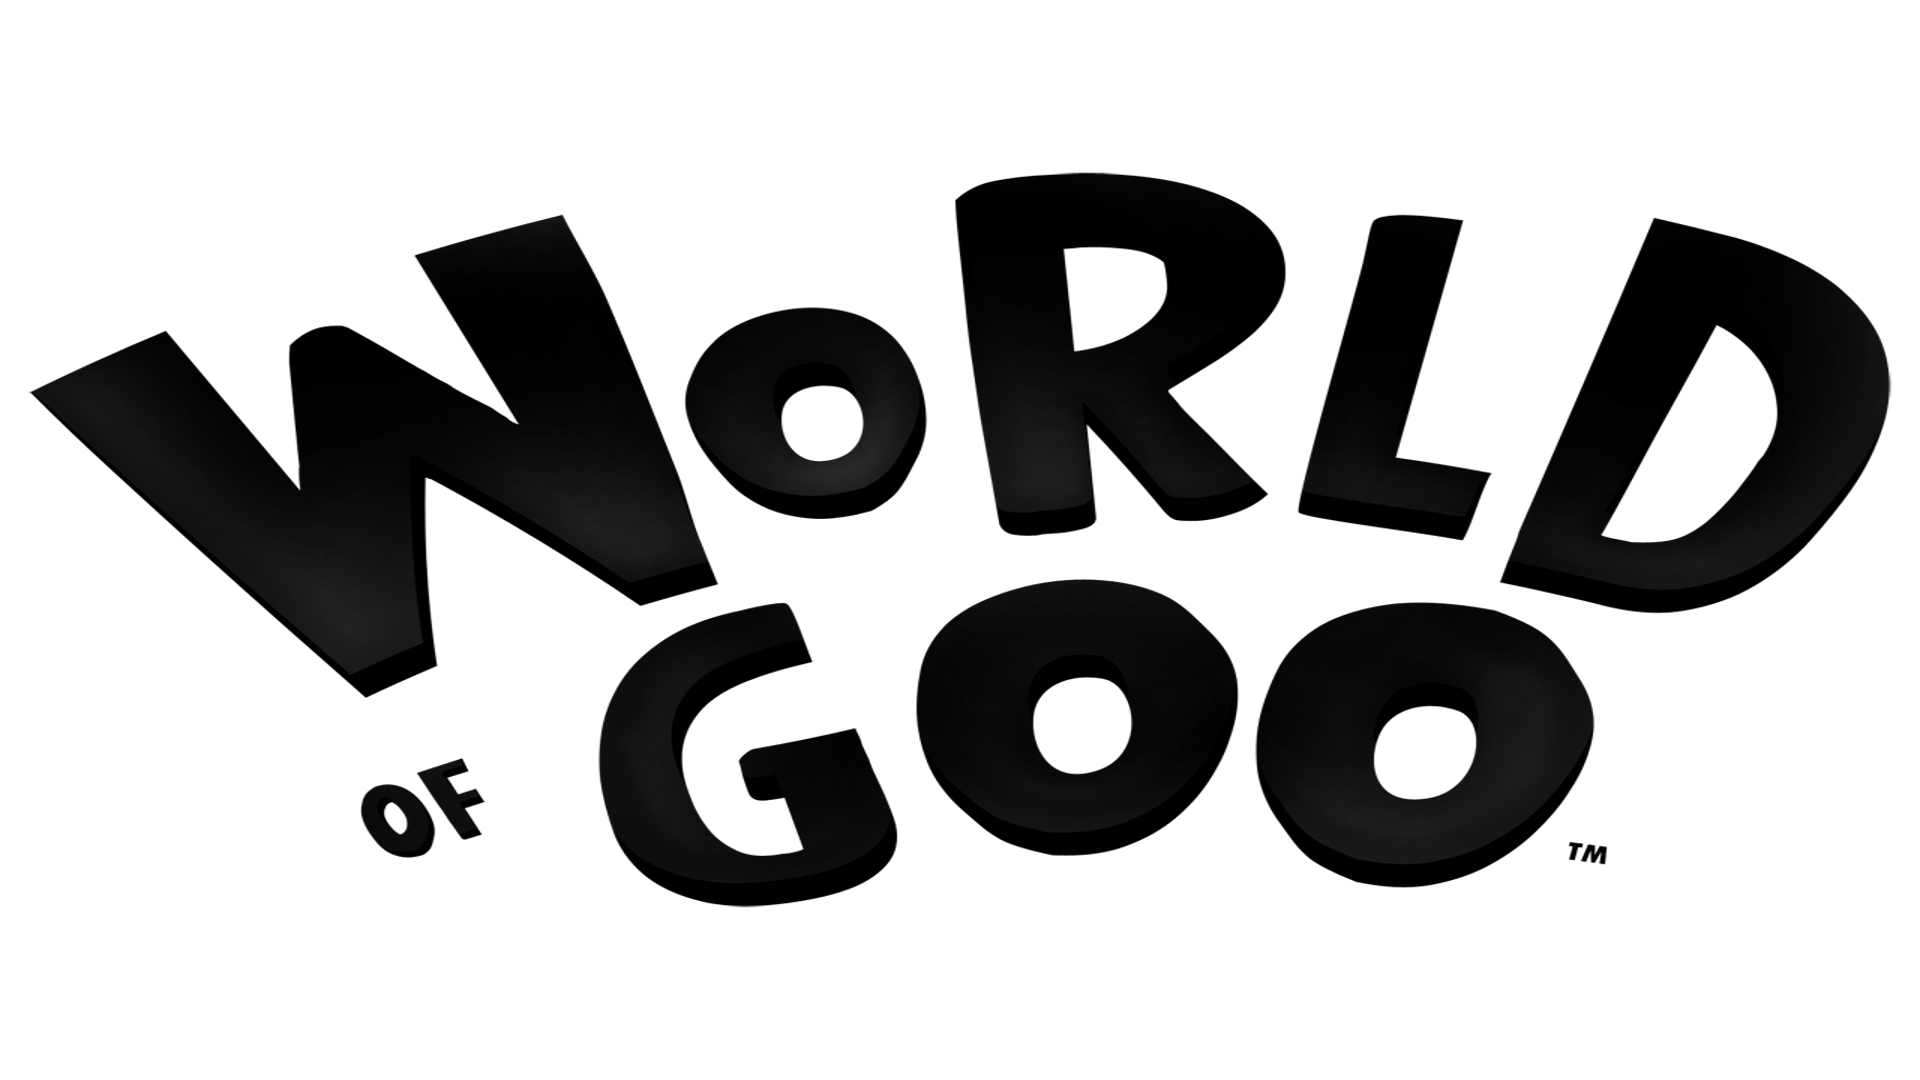 World of Goo Logo